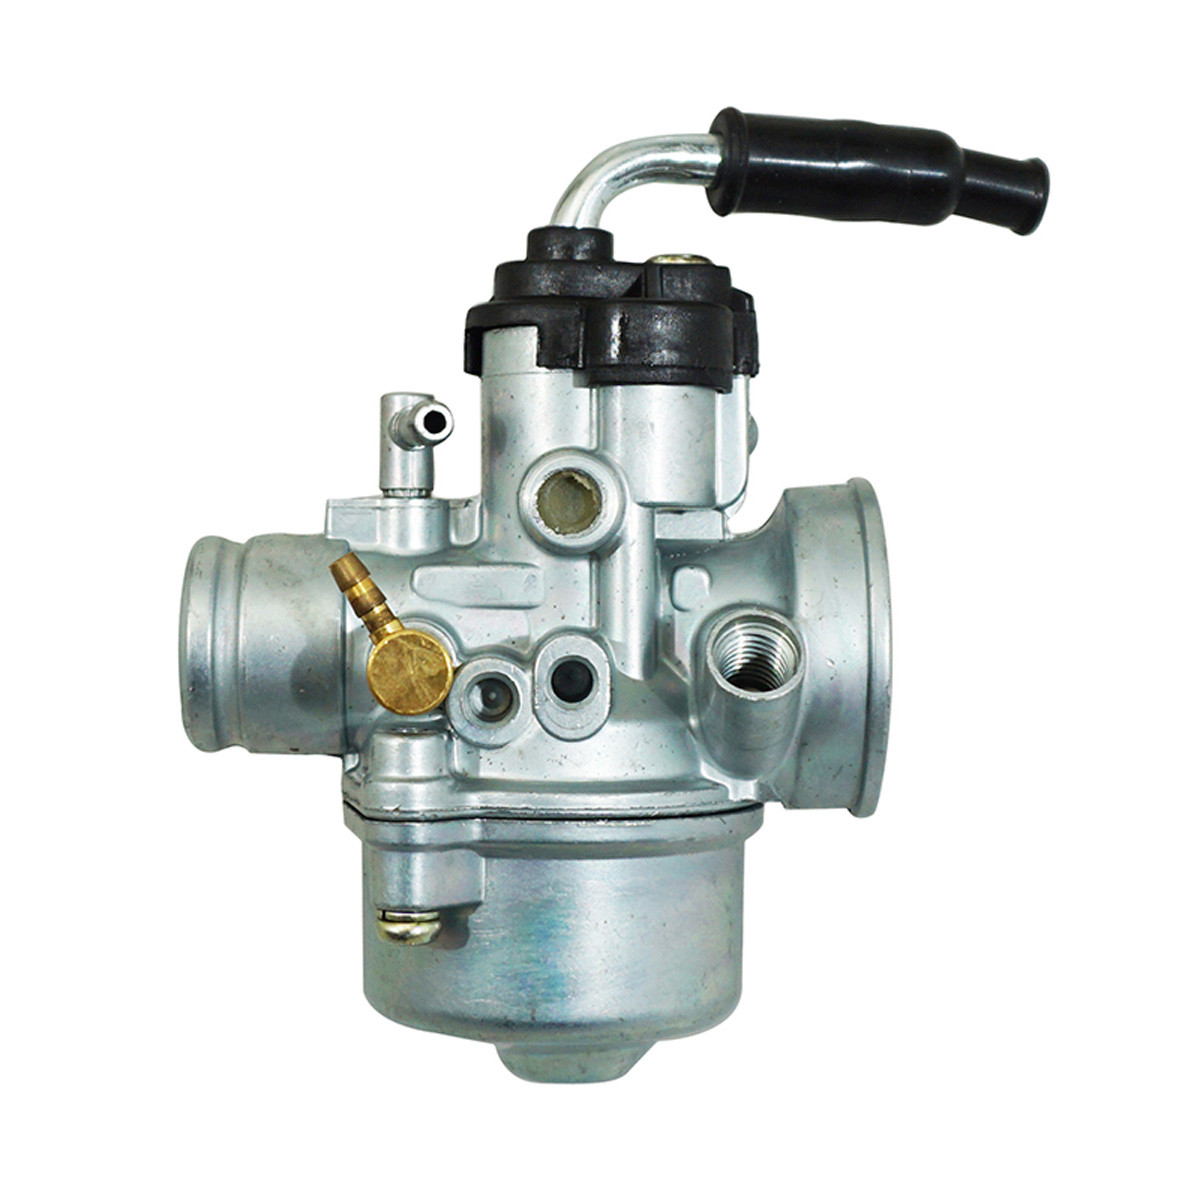 Carburateur 17.5mm - Dellorto PHVA TS Sortie gaz coudée / Starter